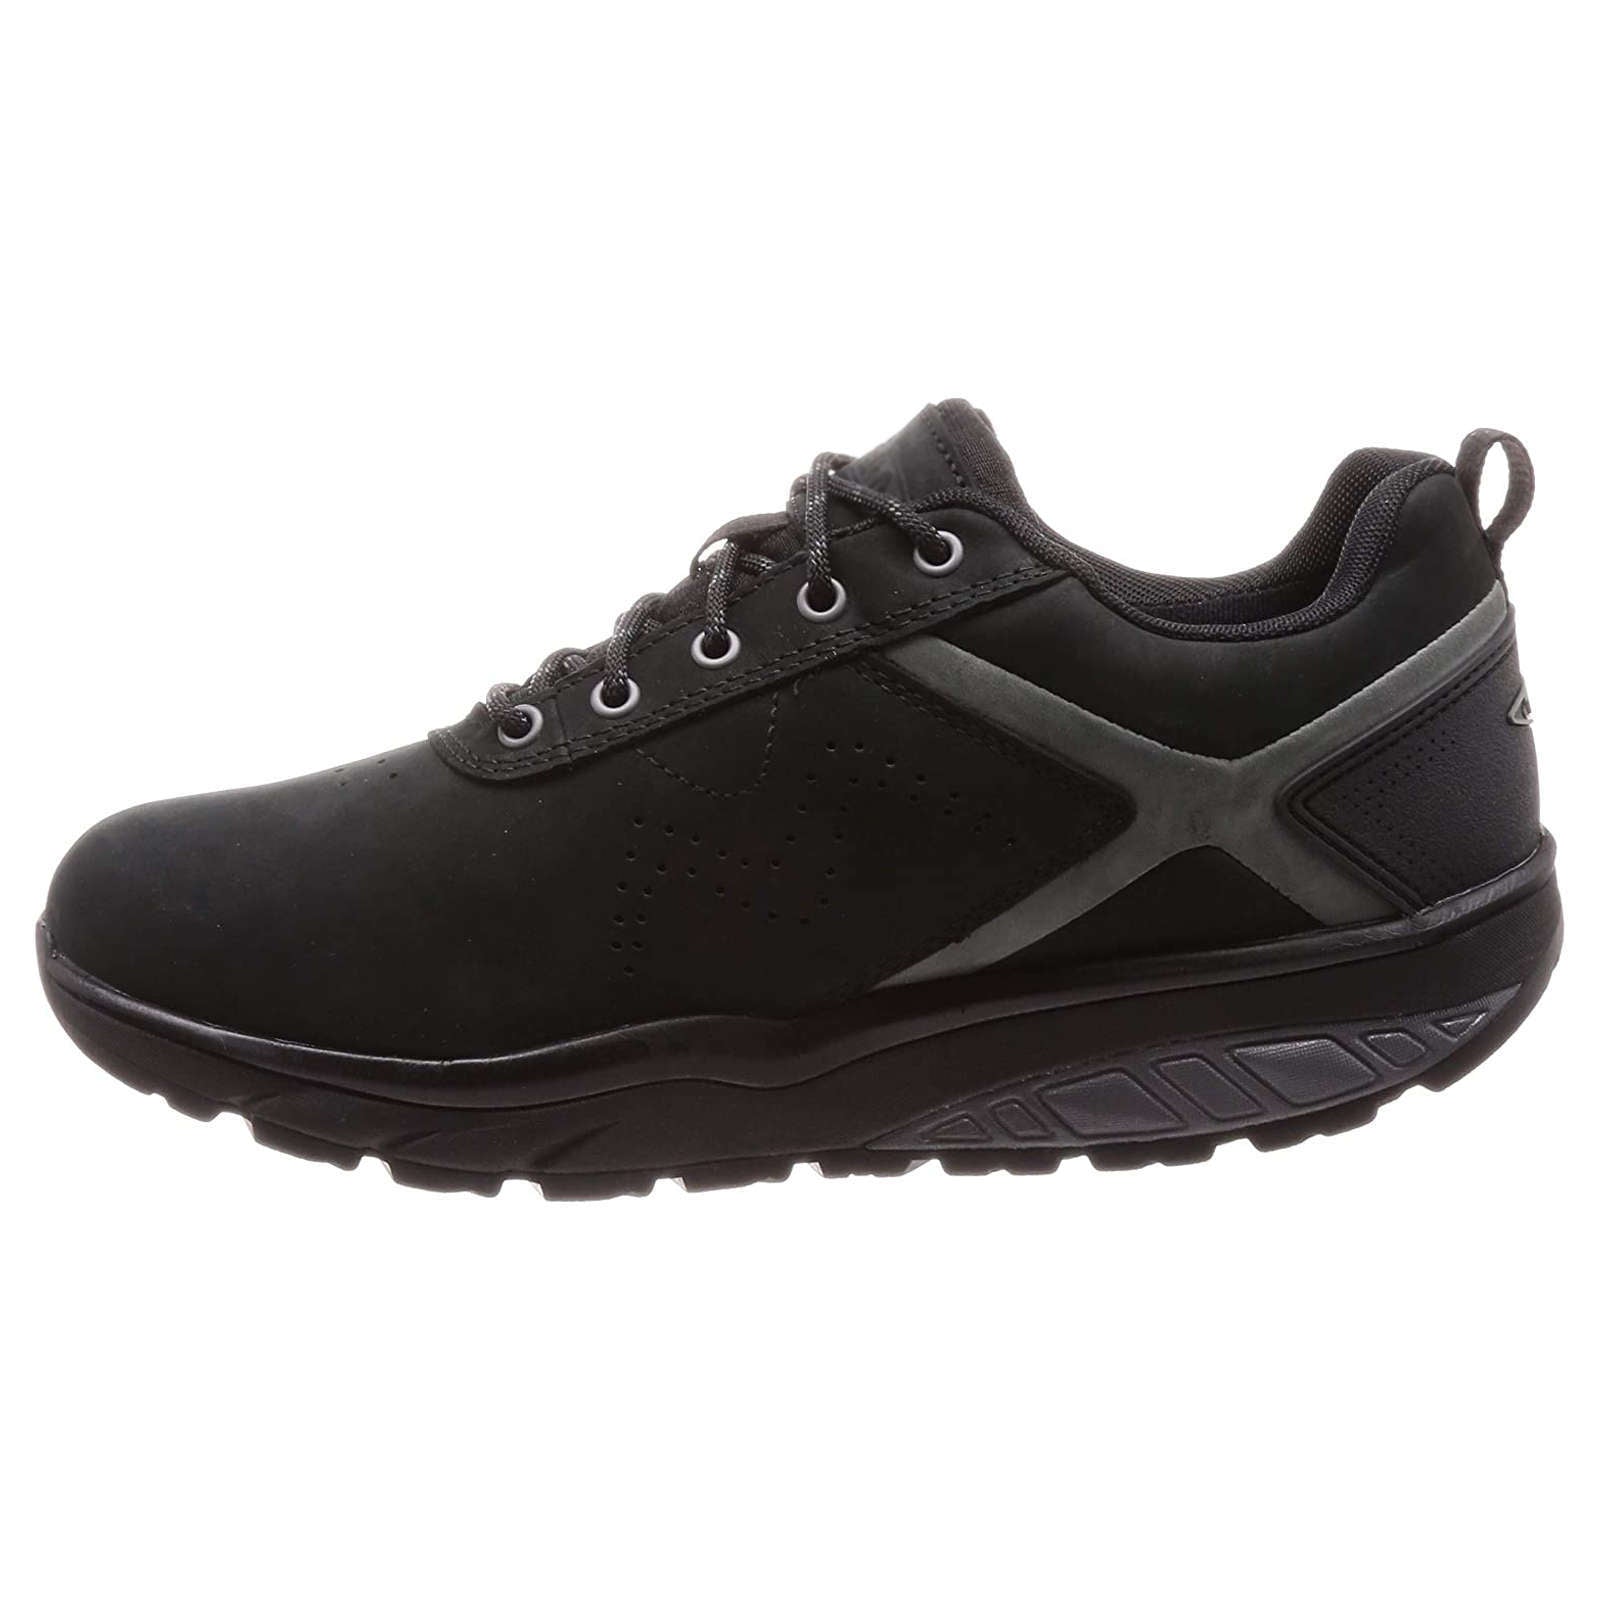 MBT Kibo GTX Waterproof Nubuck Leather Women's Hiking Shoes#color_black